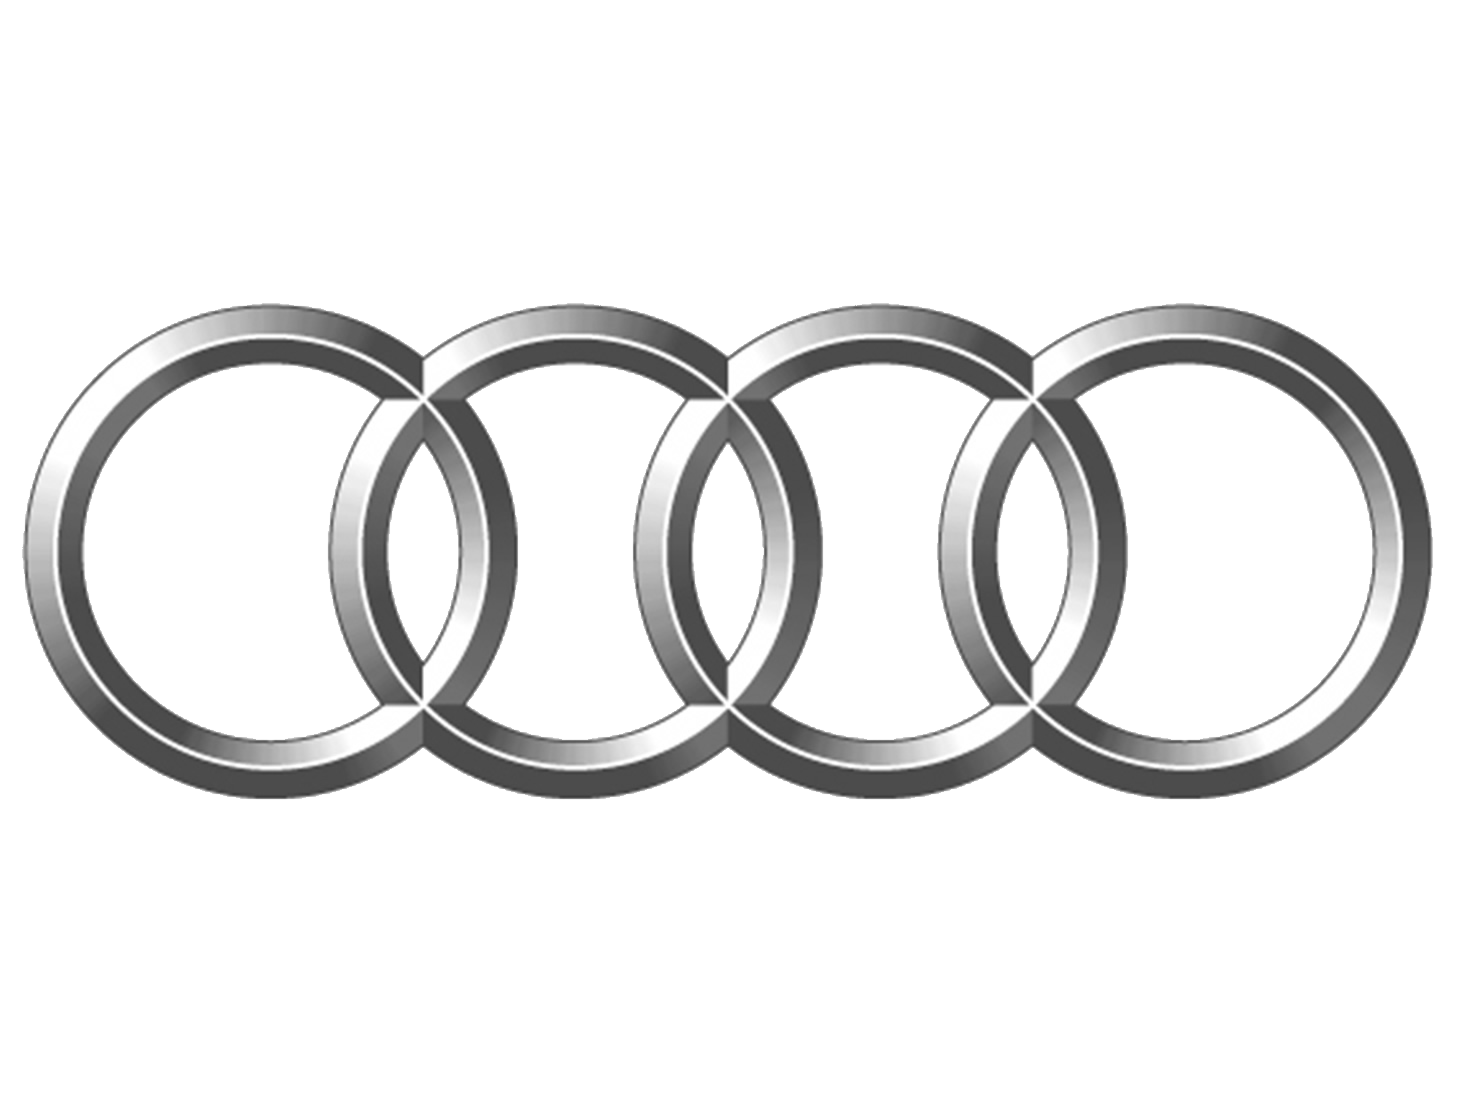 Audi Logo Png Image | Png Mar